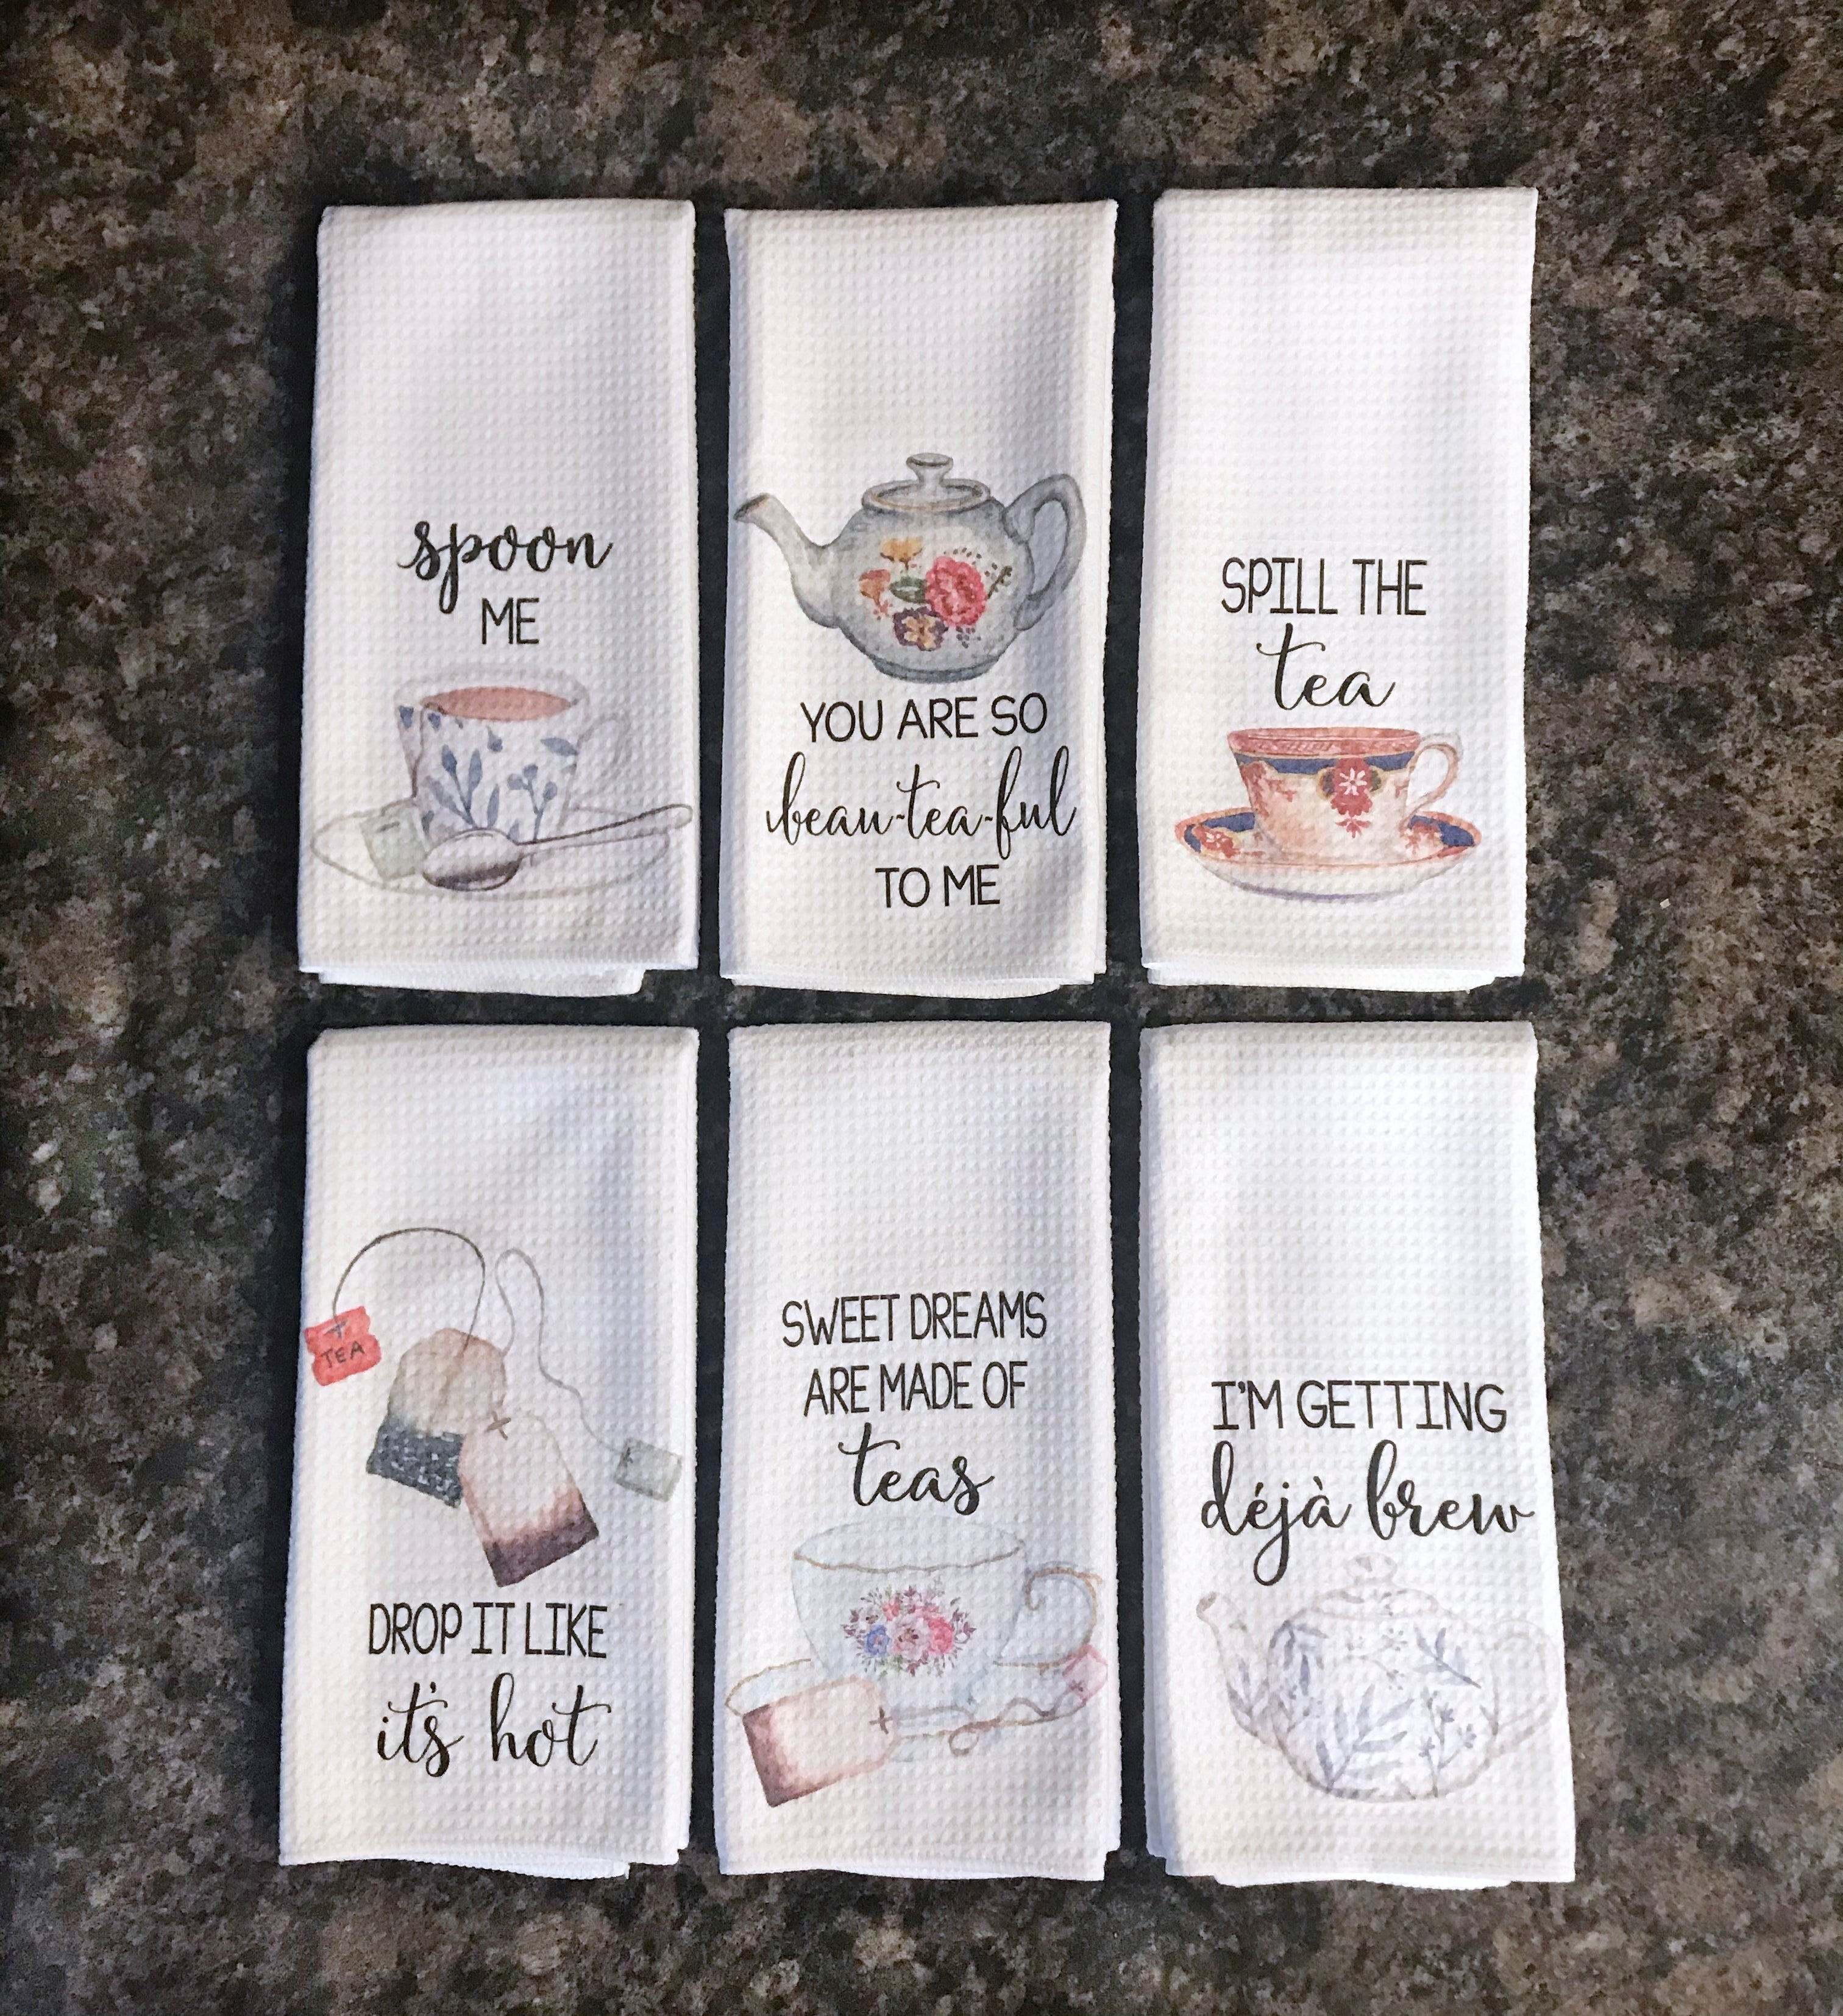 Brownlow Gifts Kiss The Cook Tea Towel